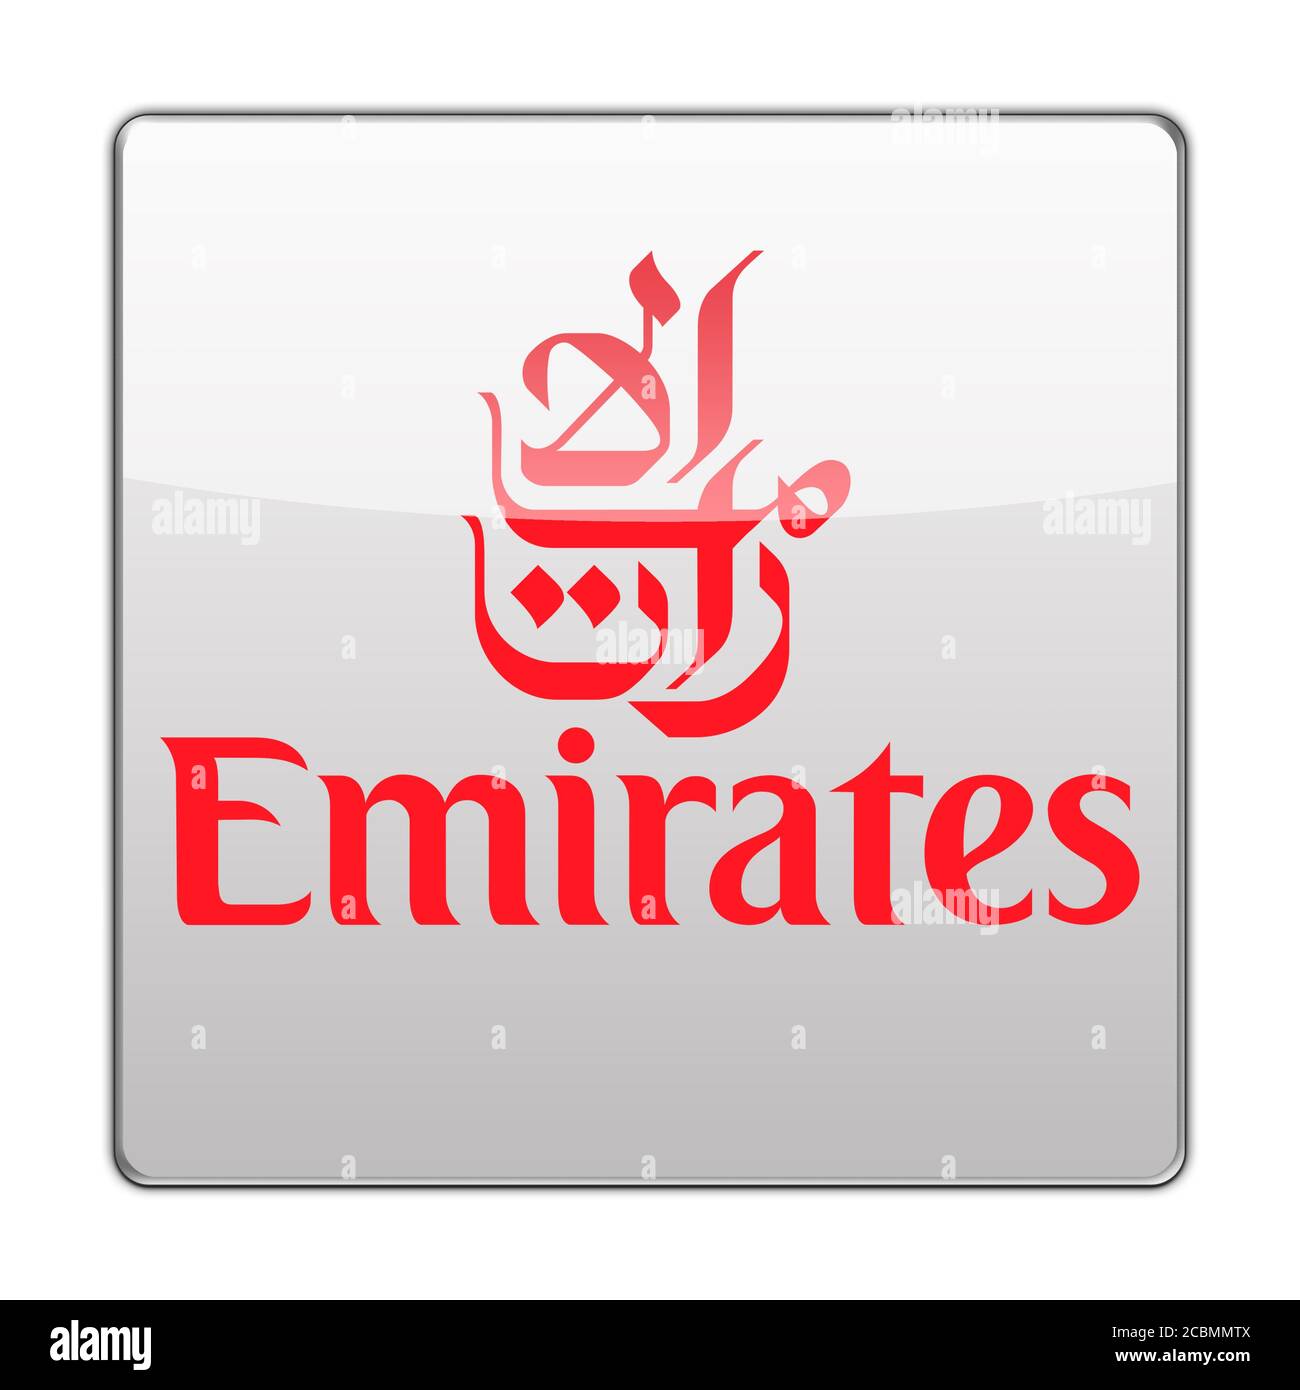 Emirates Airline icon Stock Photo